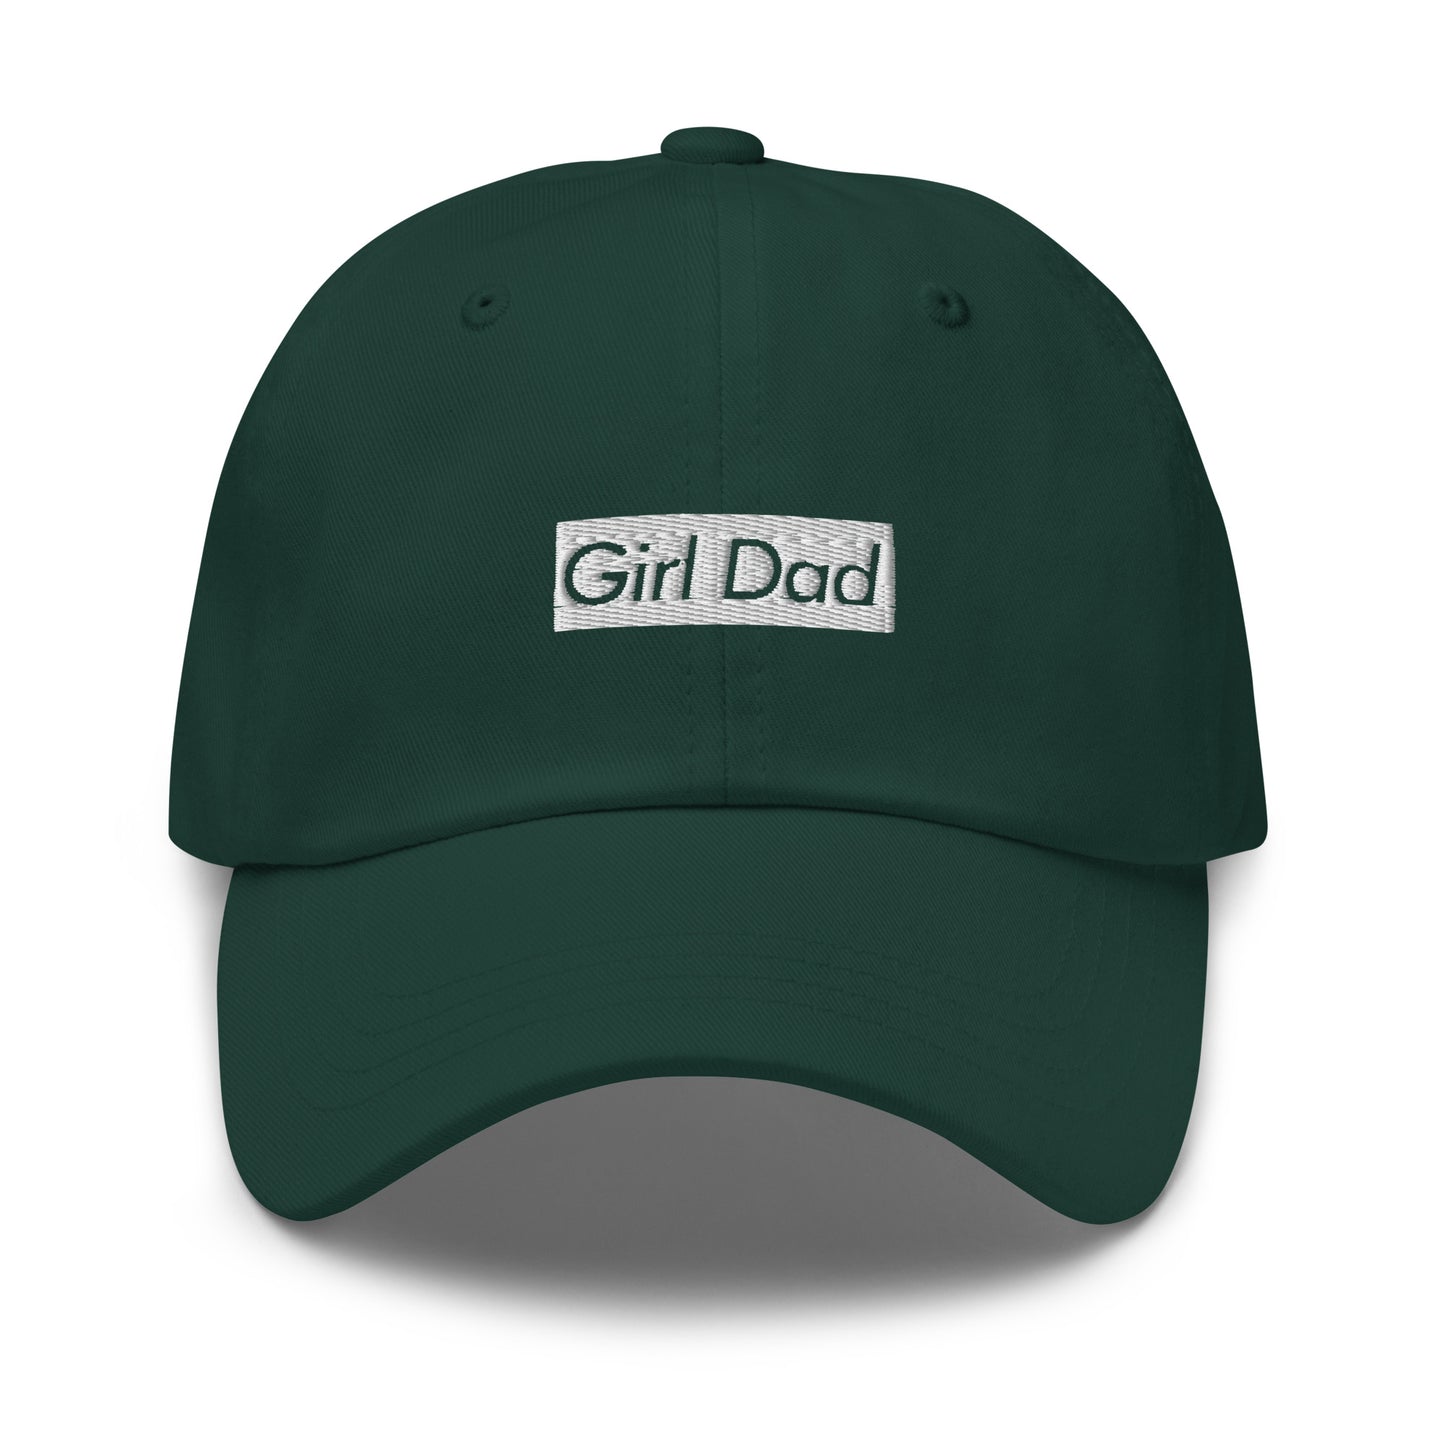 Girl Dad Green Dad Strap back hat